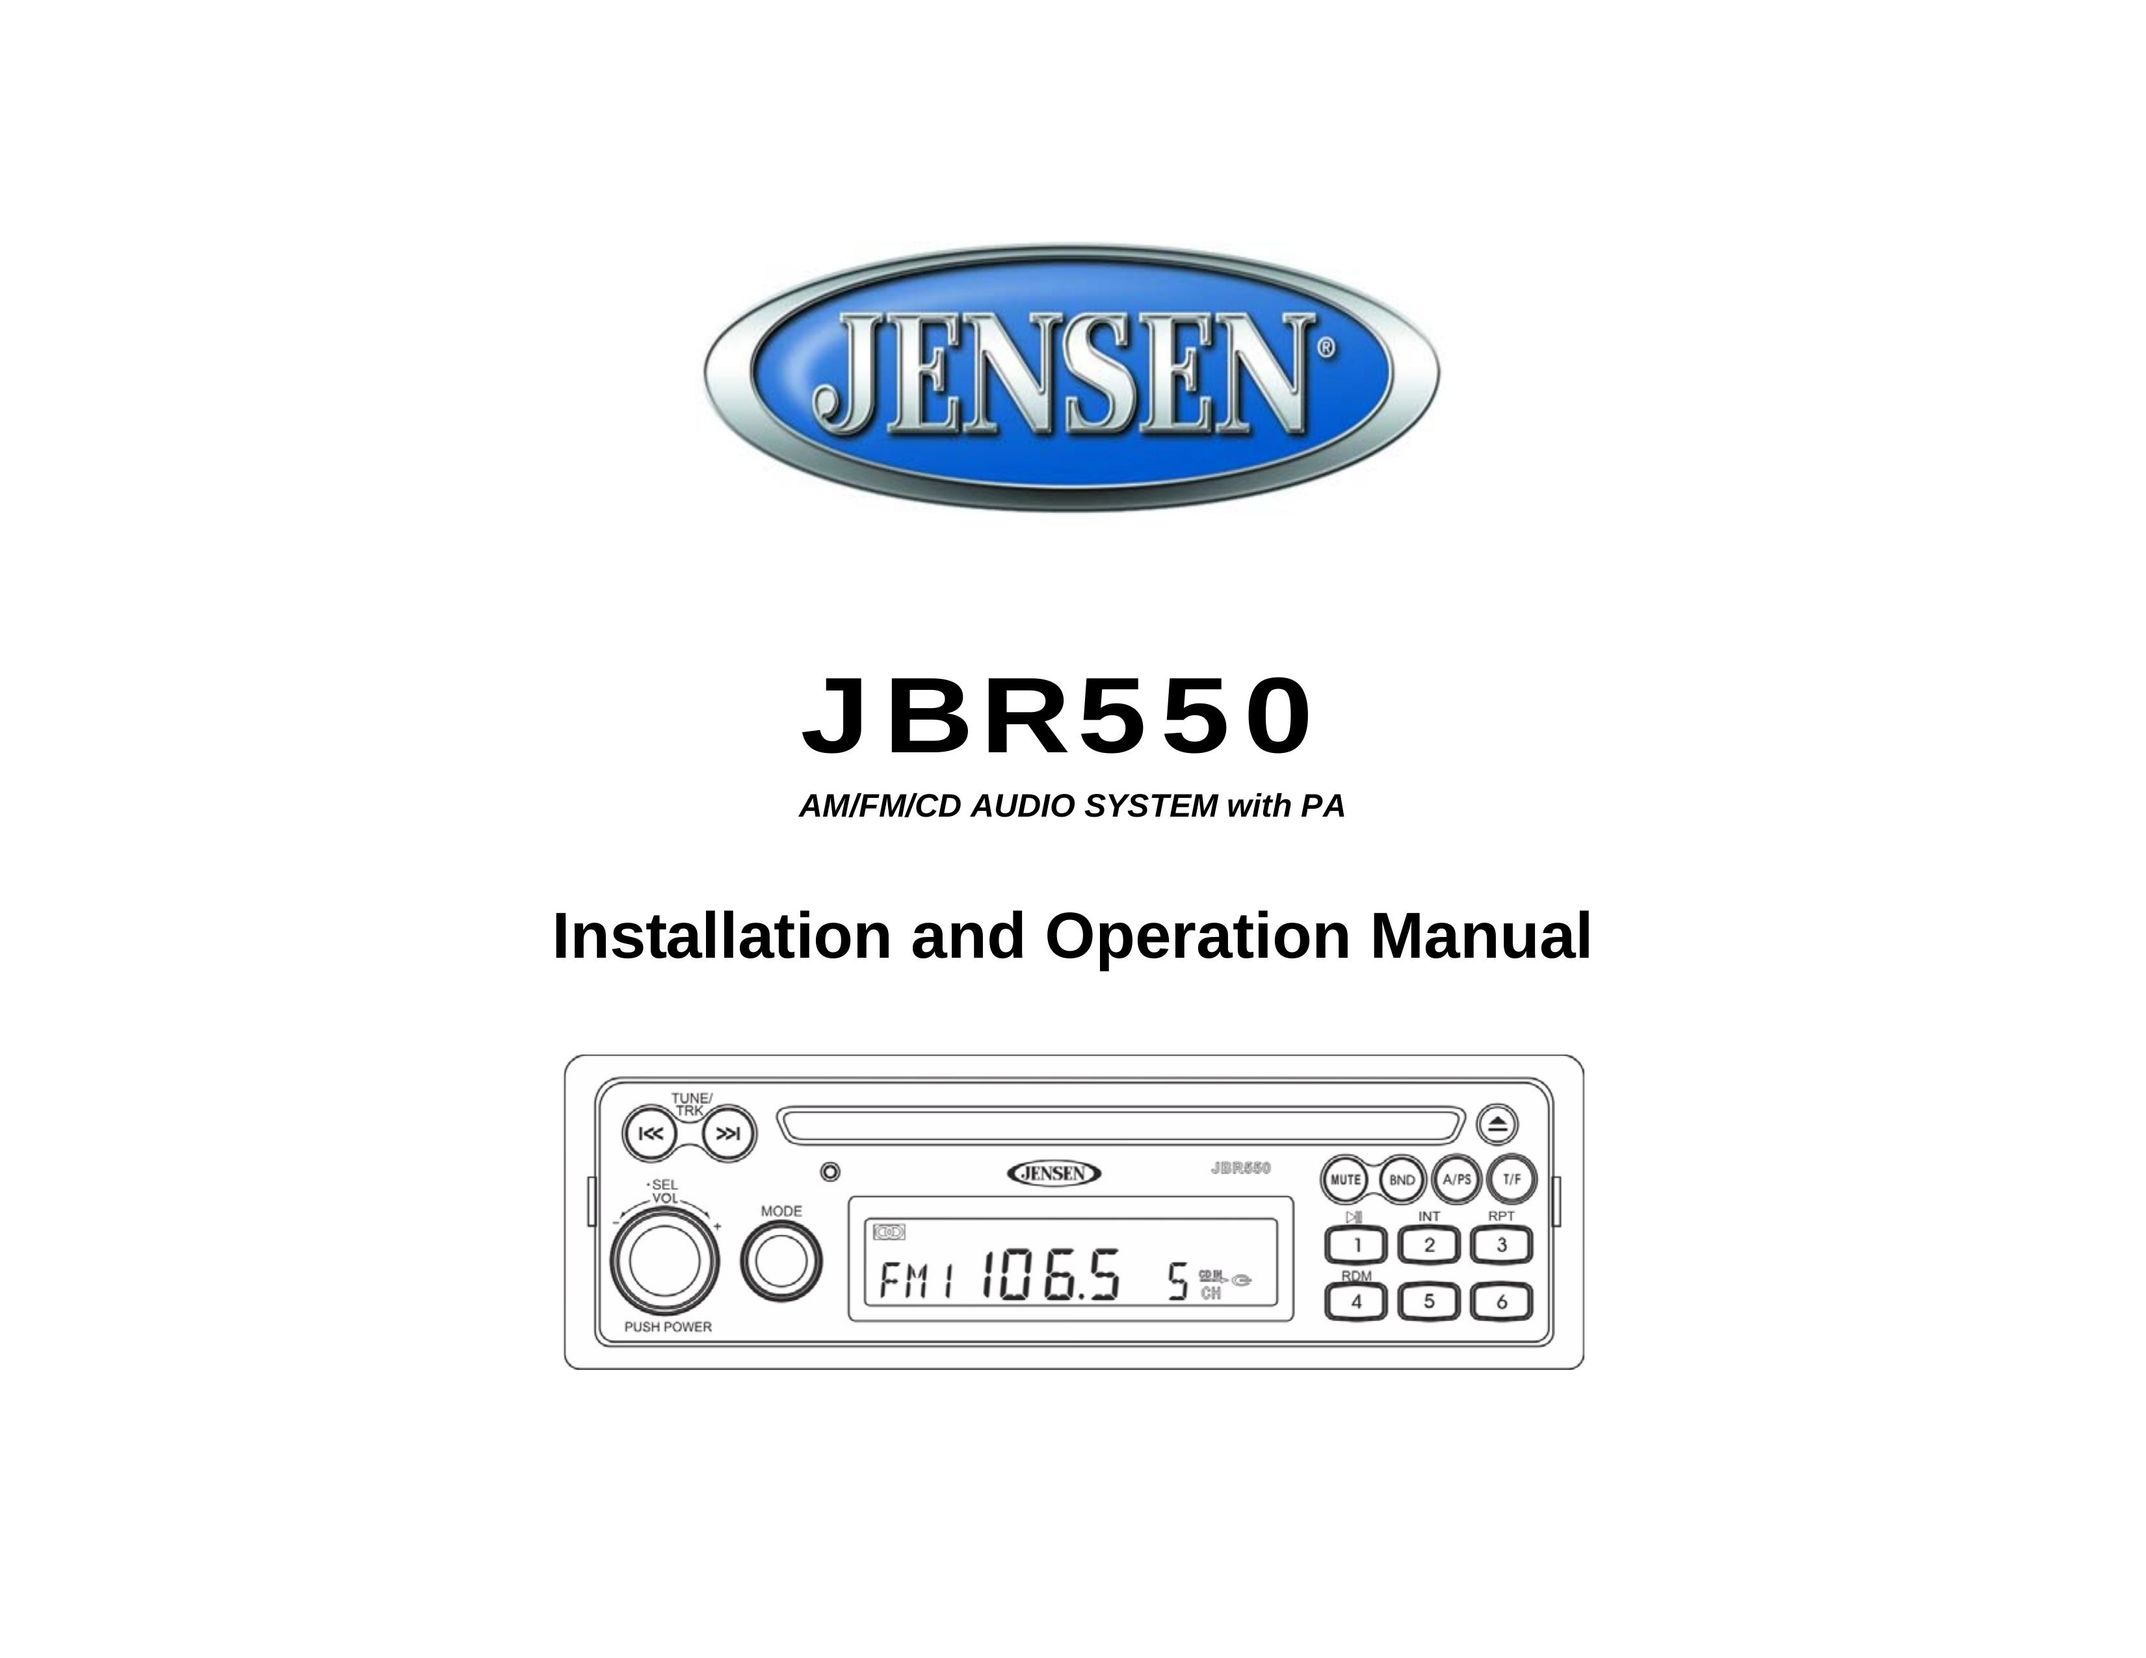 Jensen JBR550 Stereo System User Manual